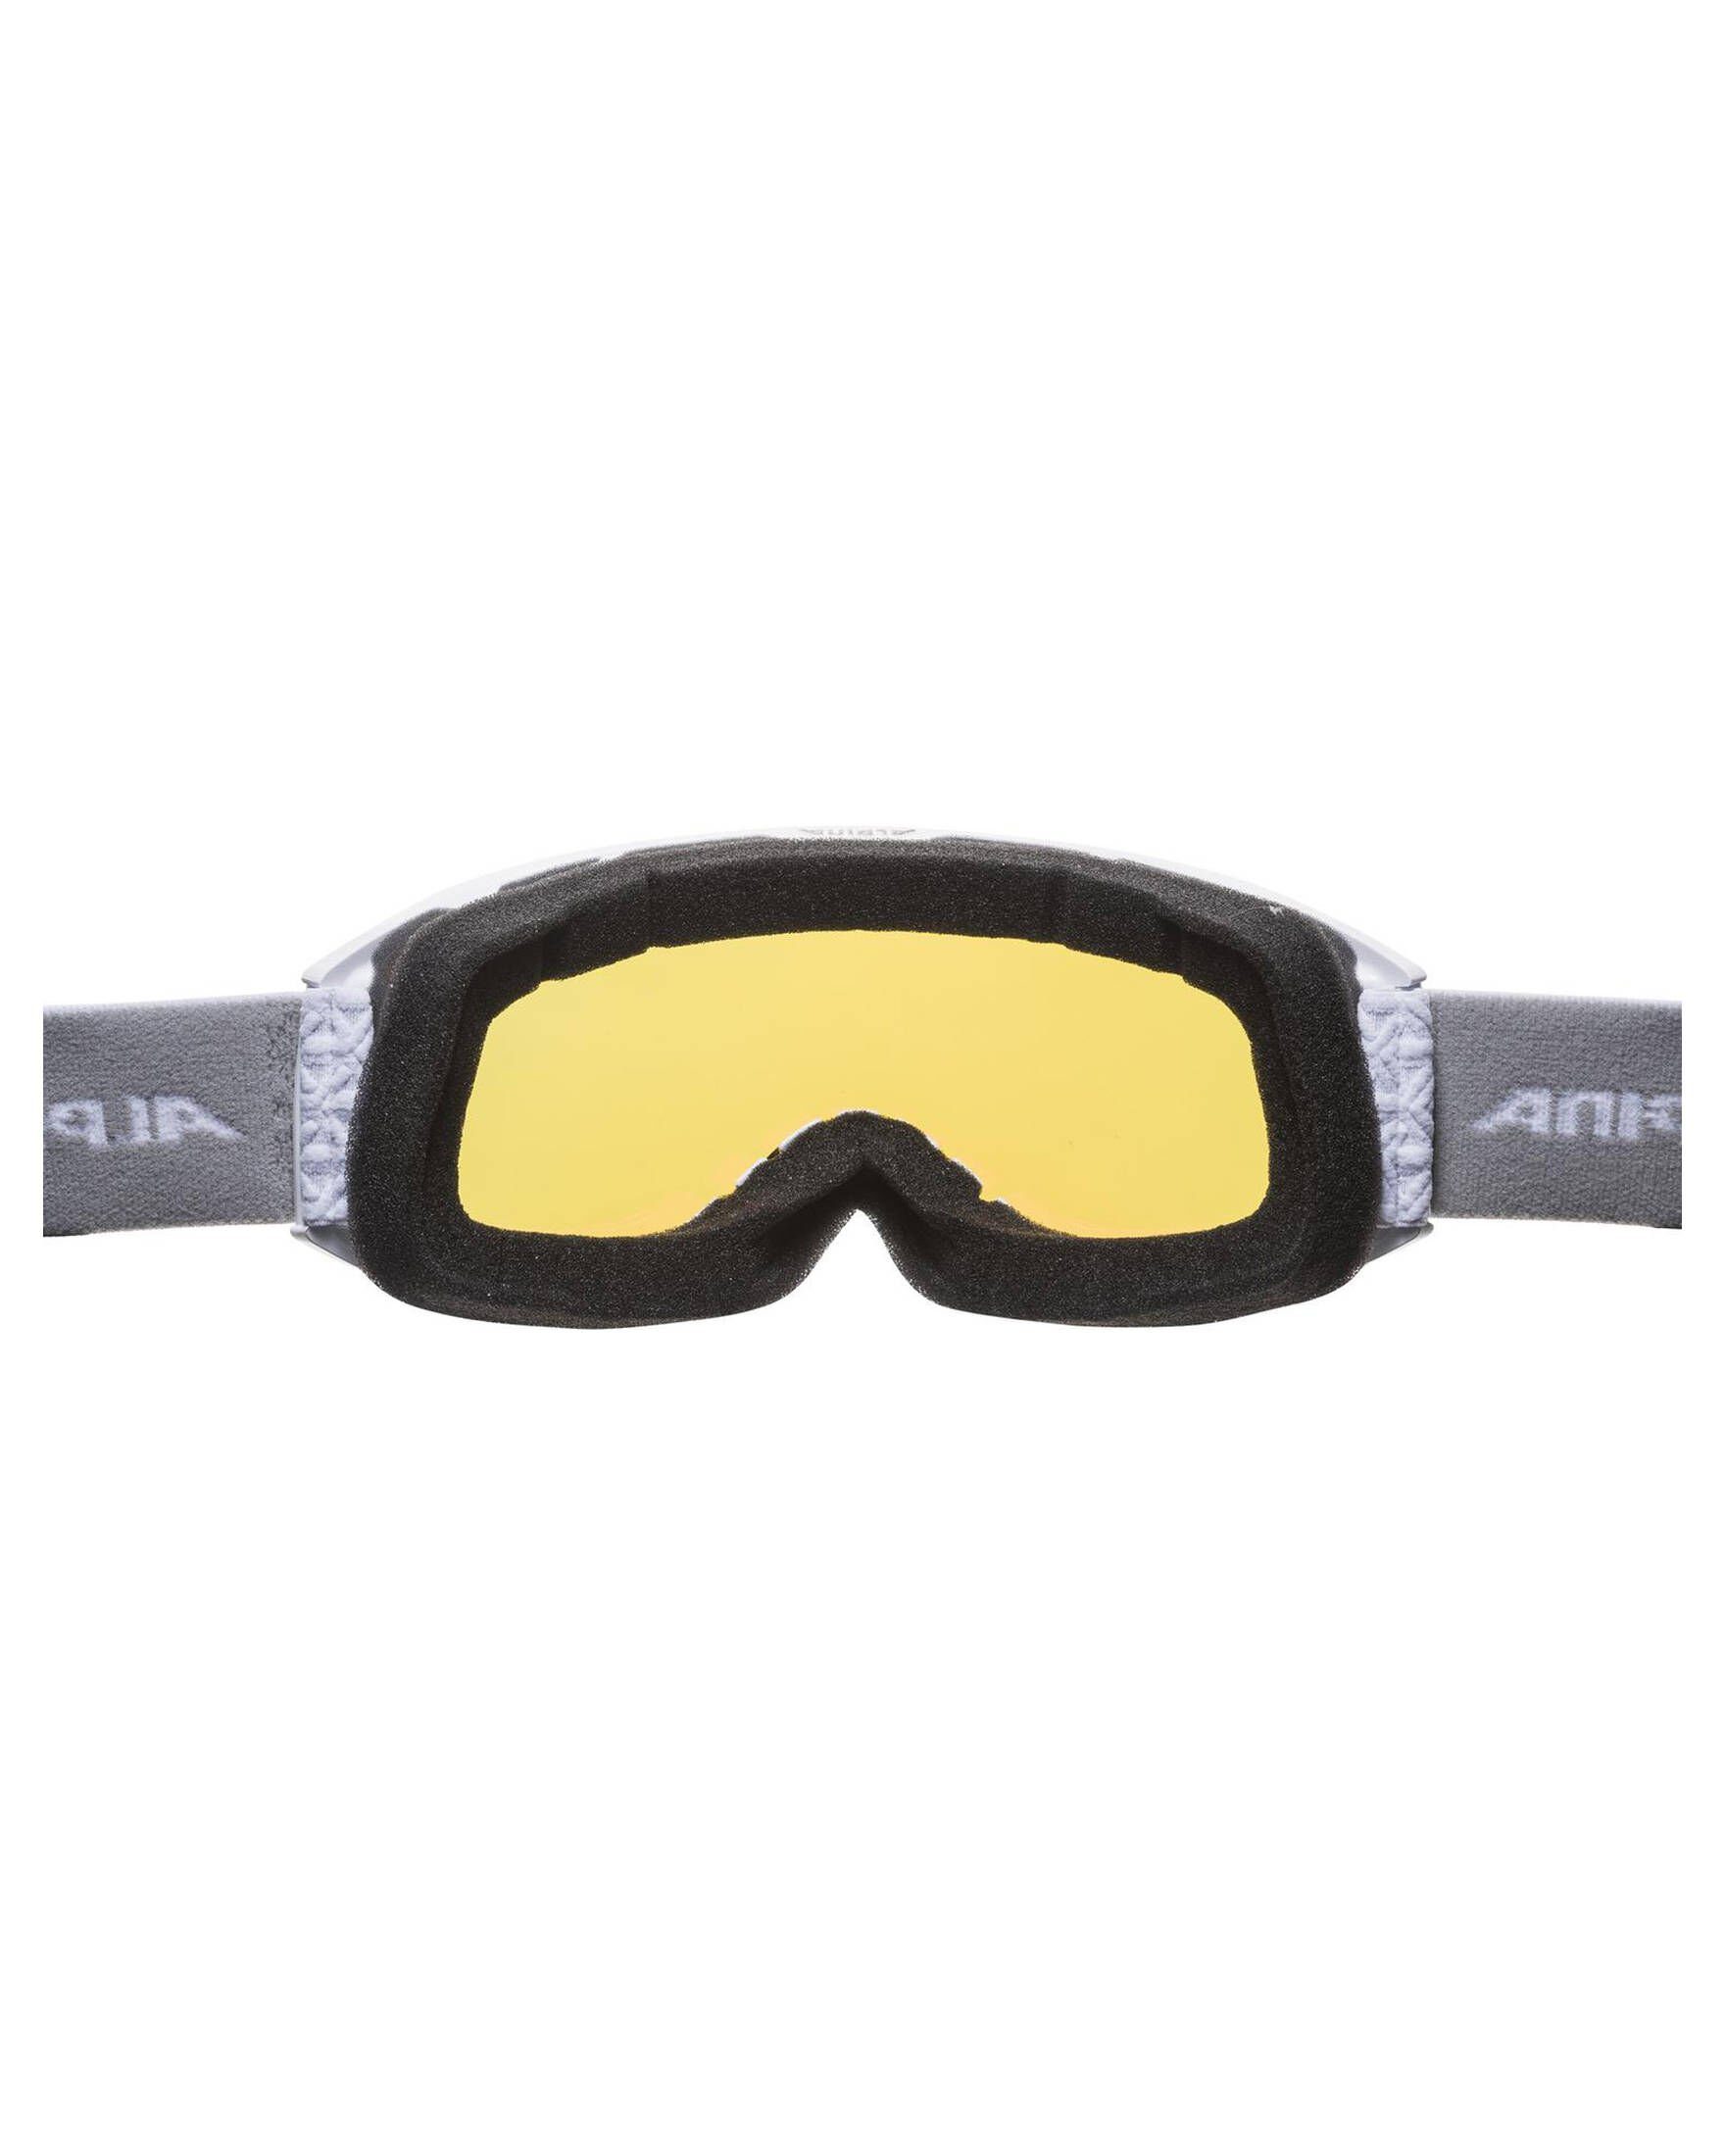 Alpina Sports Skibrille Skibrille/Snowboardbrille NAKISKA Karo (811) Q-LITE 2